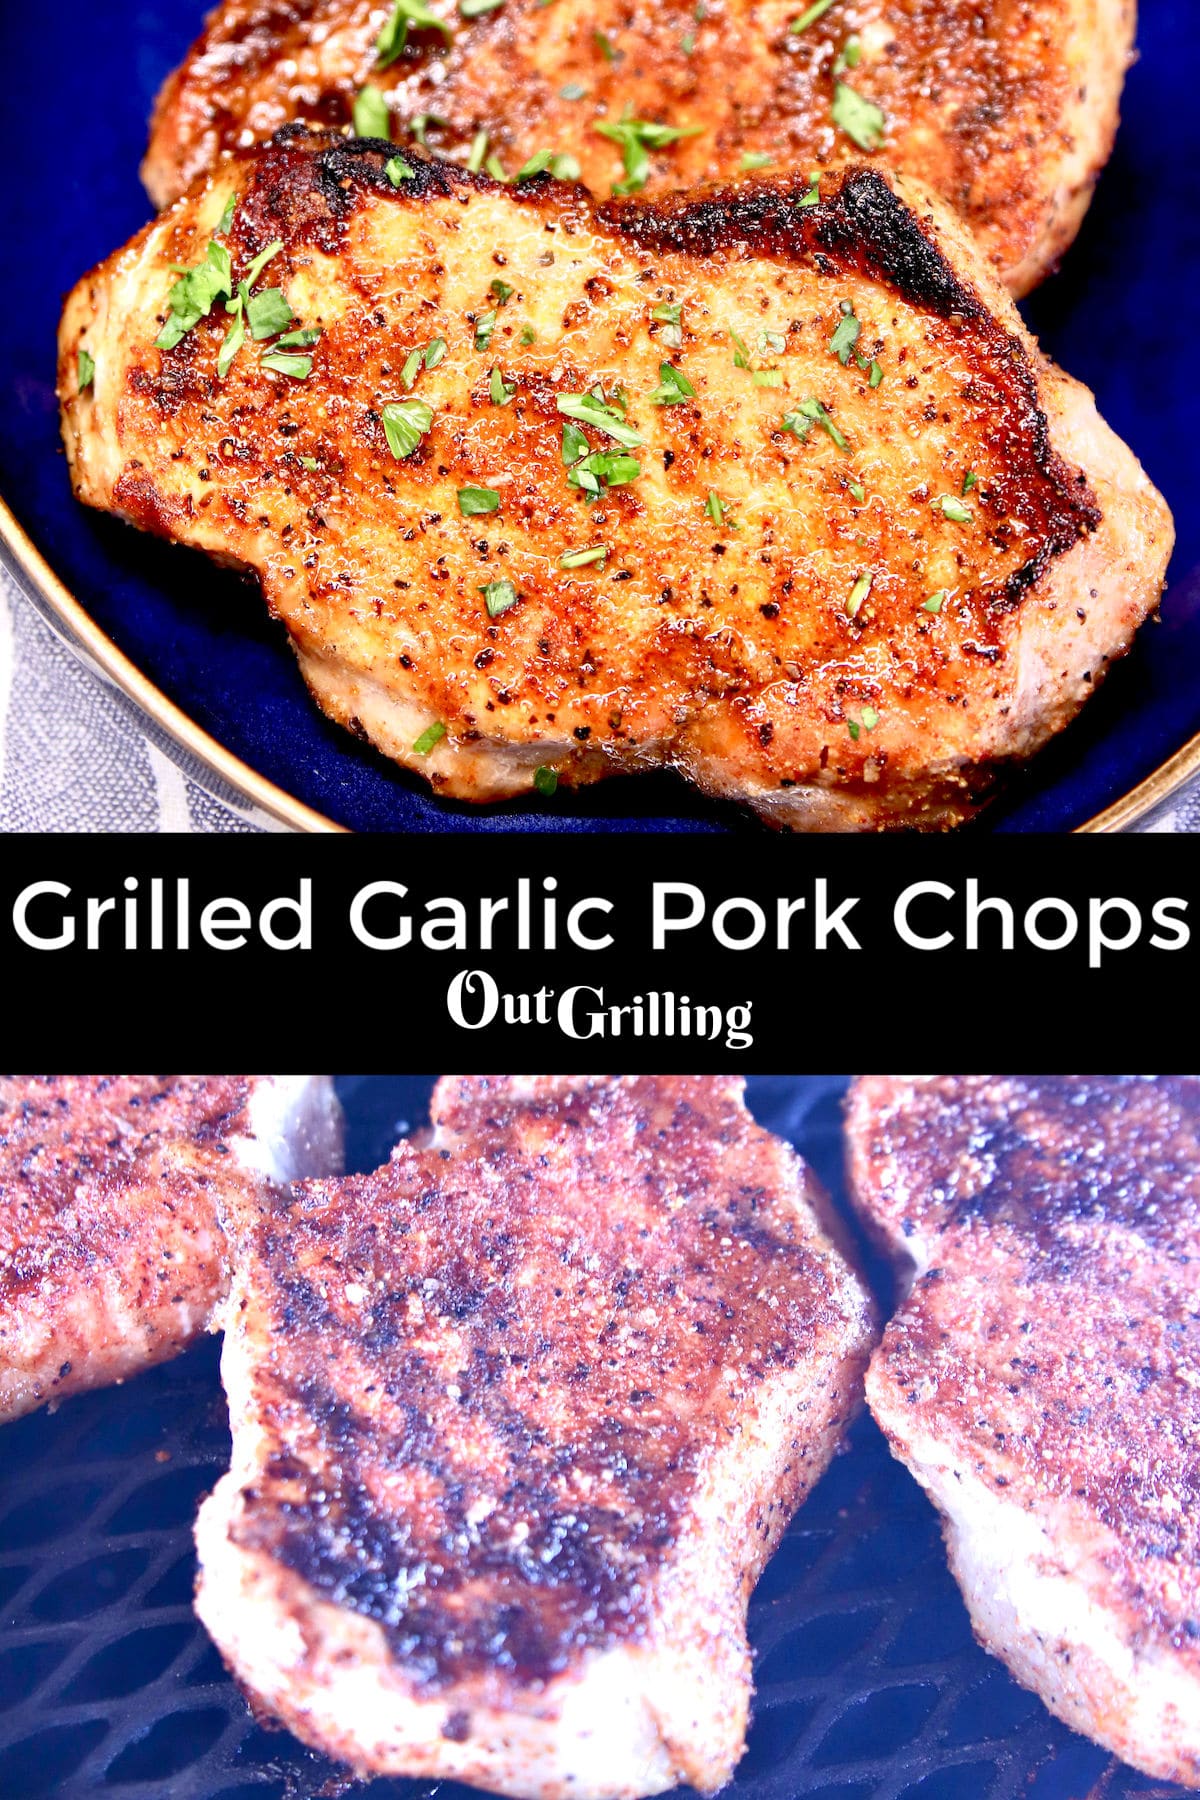 Grilled Garlic Pork Chops - Out Grilling